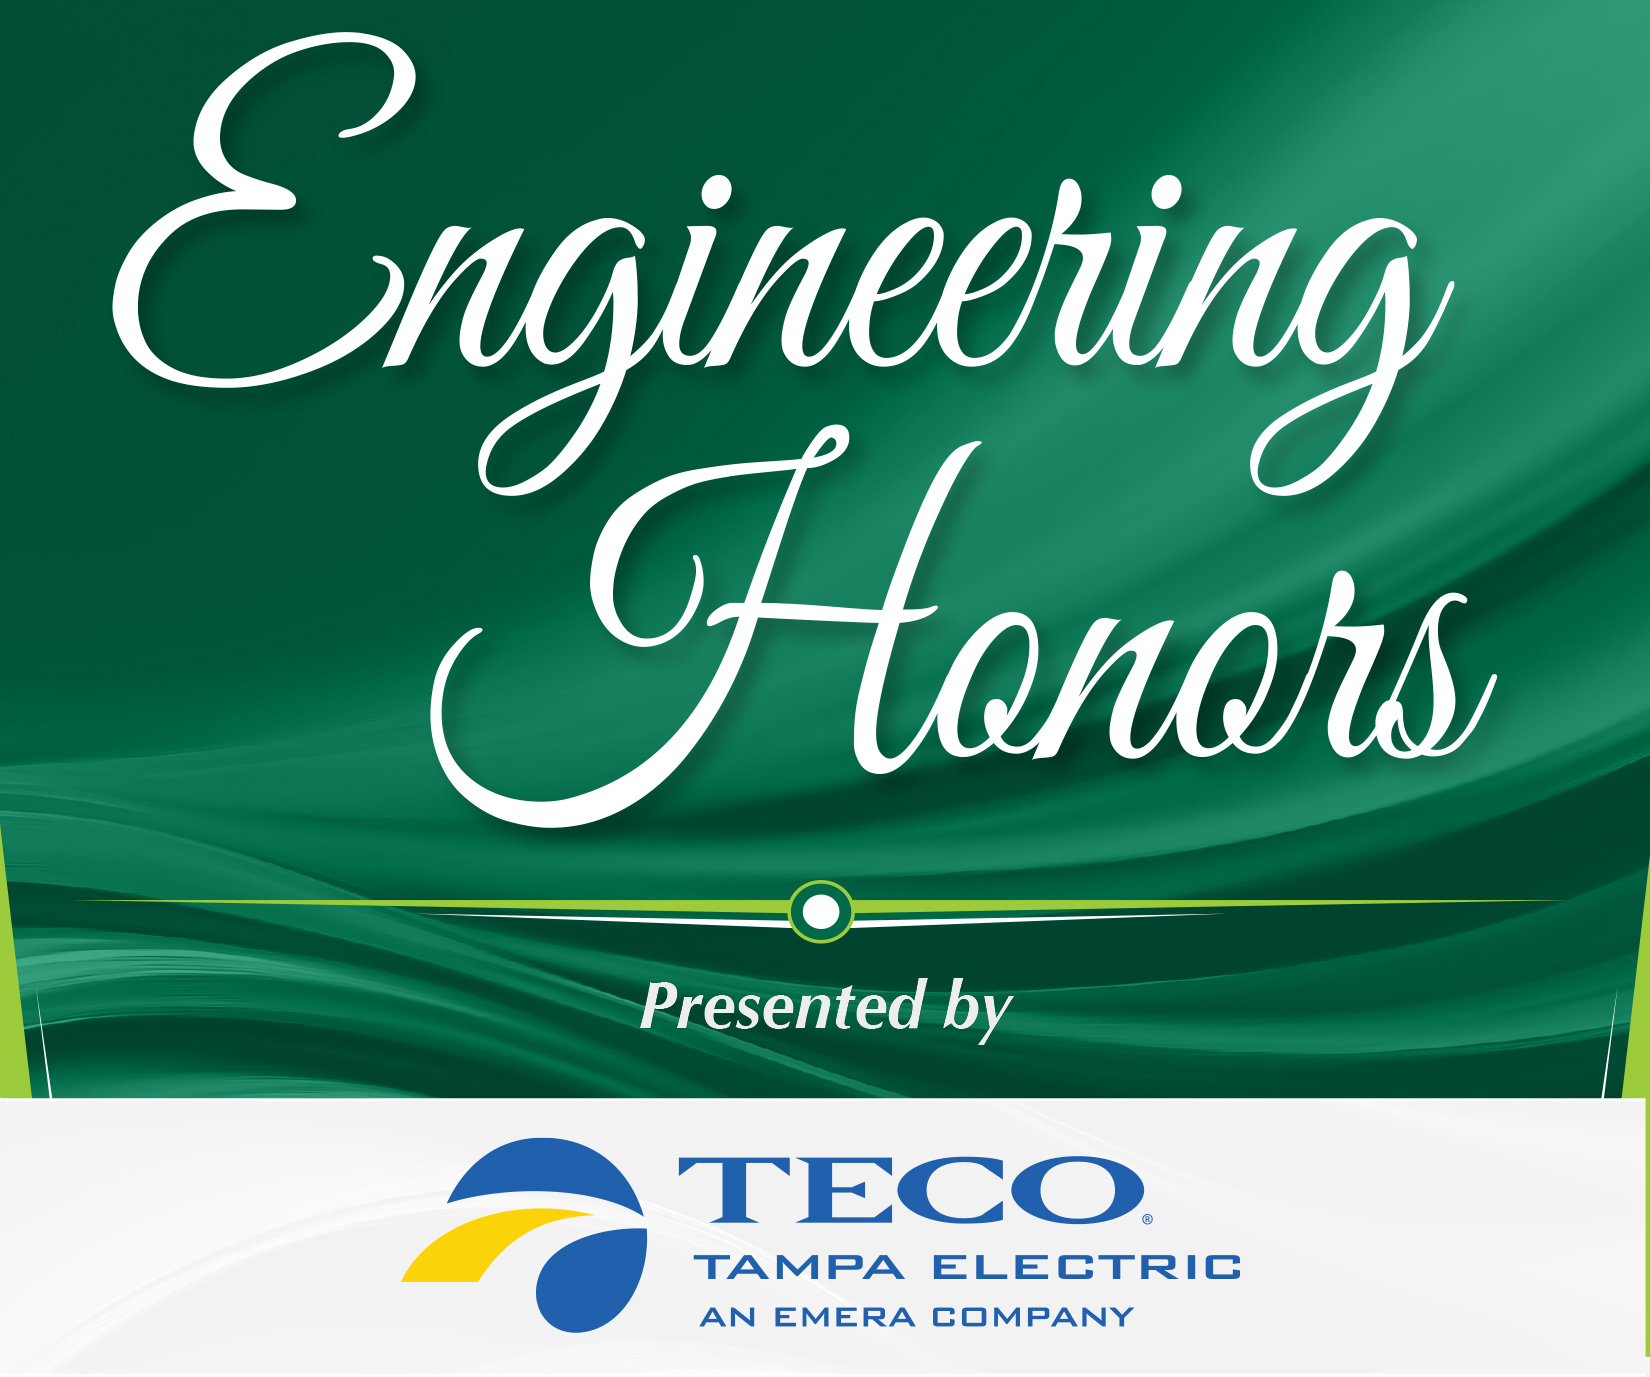 Engineering Honors presented by TECO